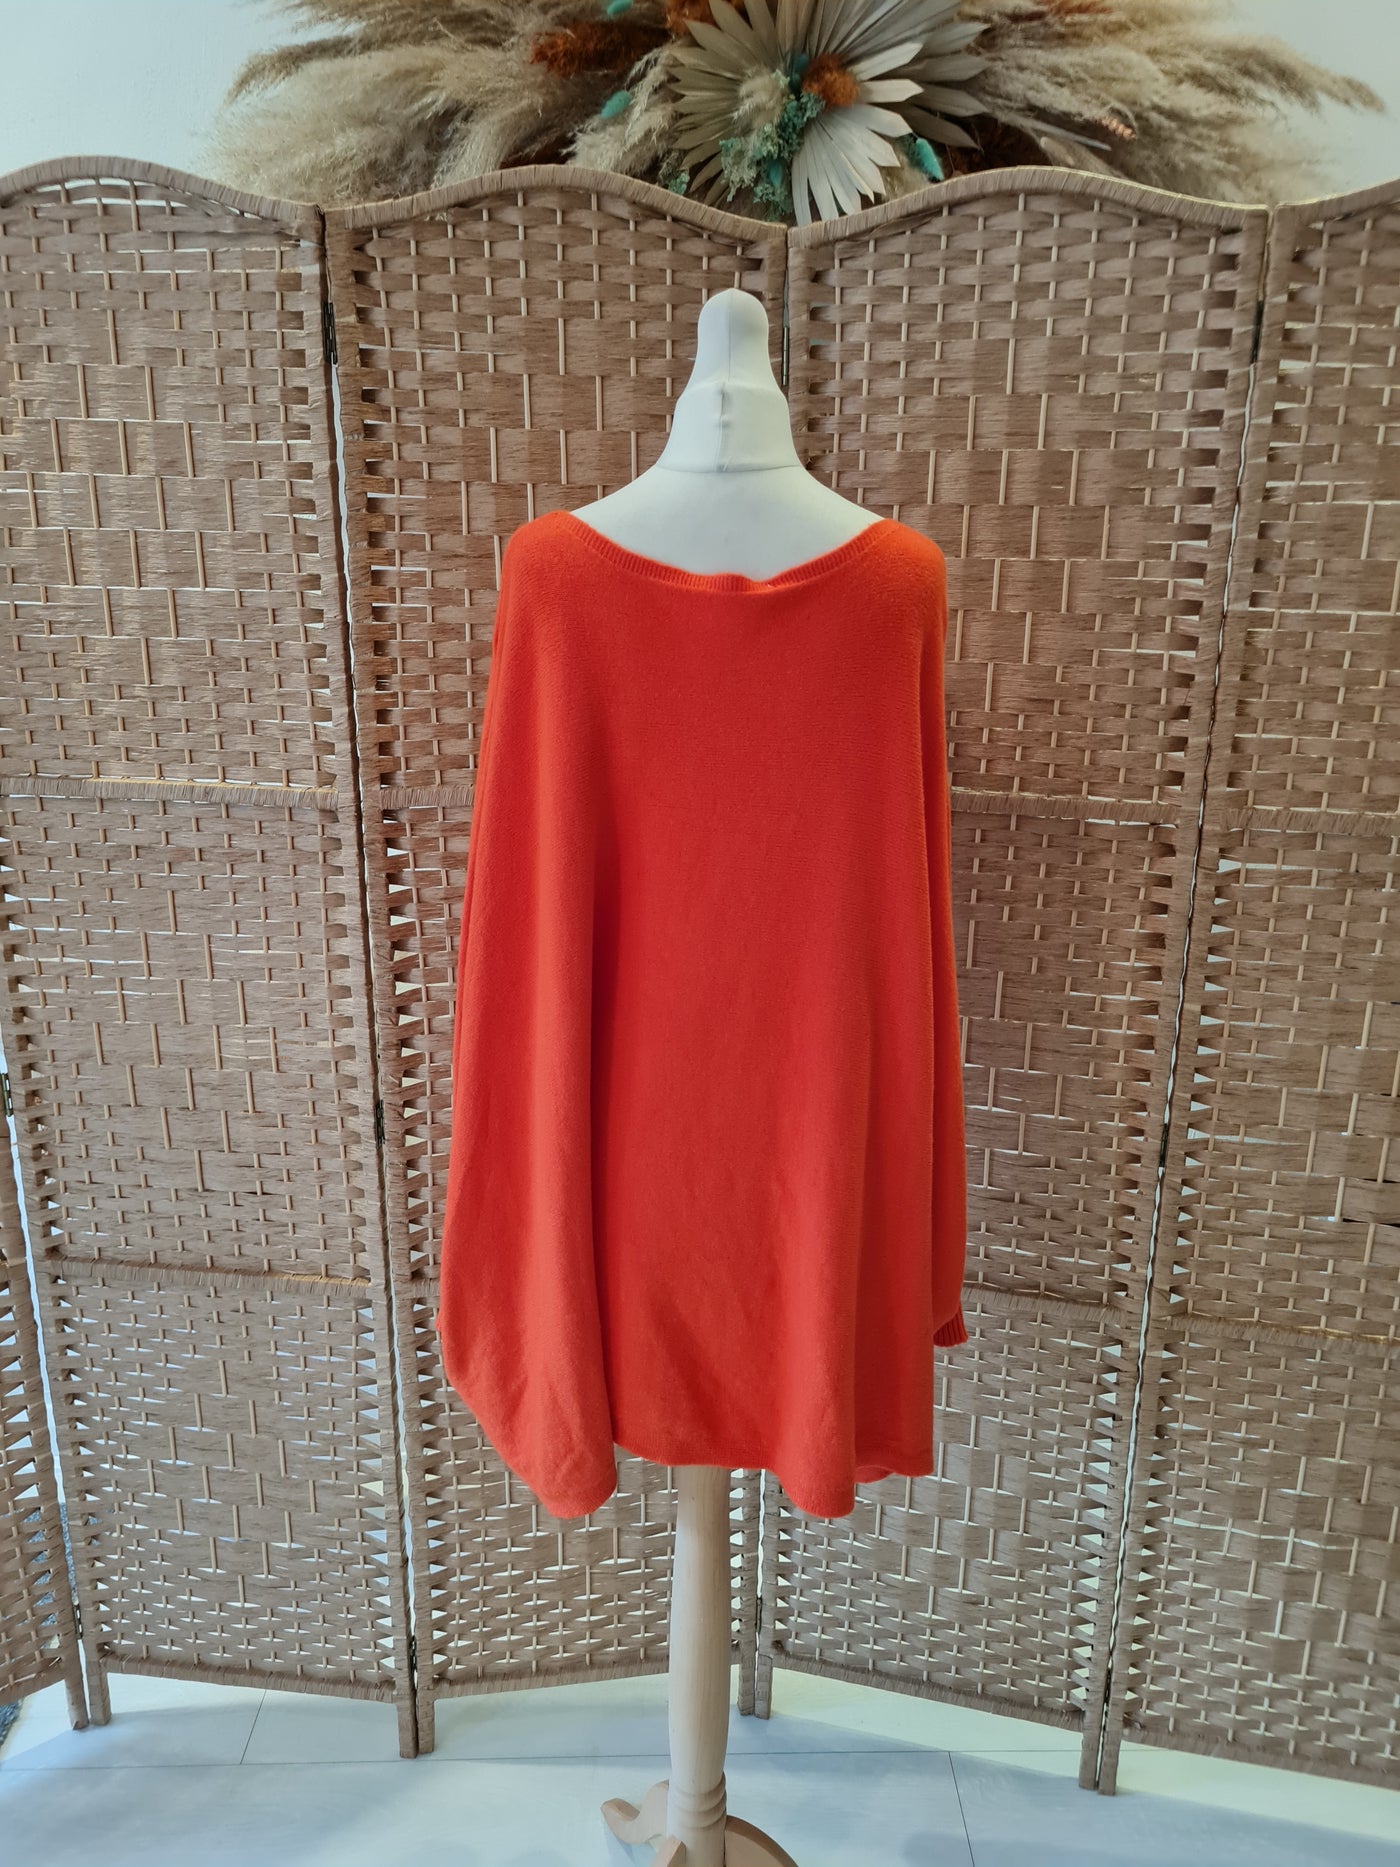 Cashmere blend oversized knit in orange